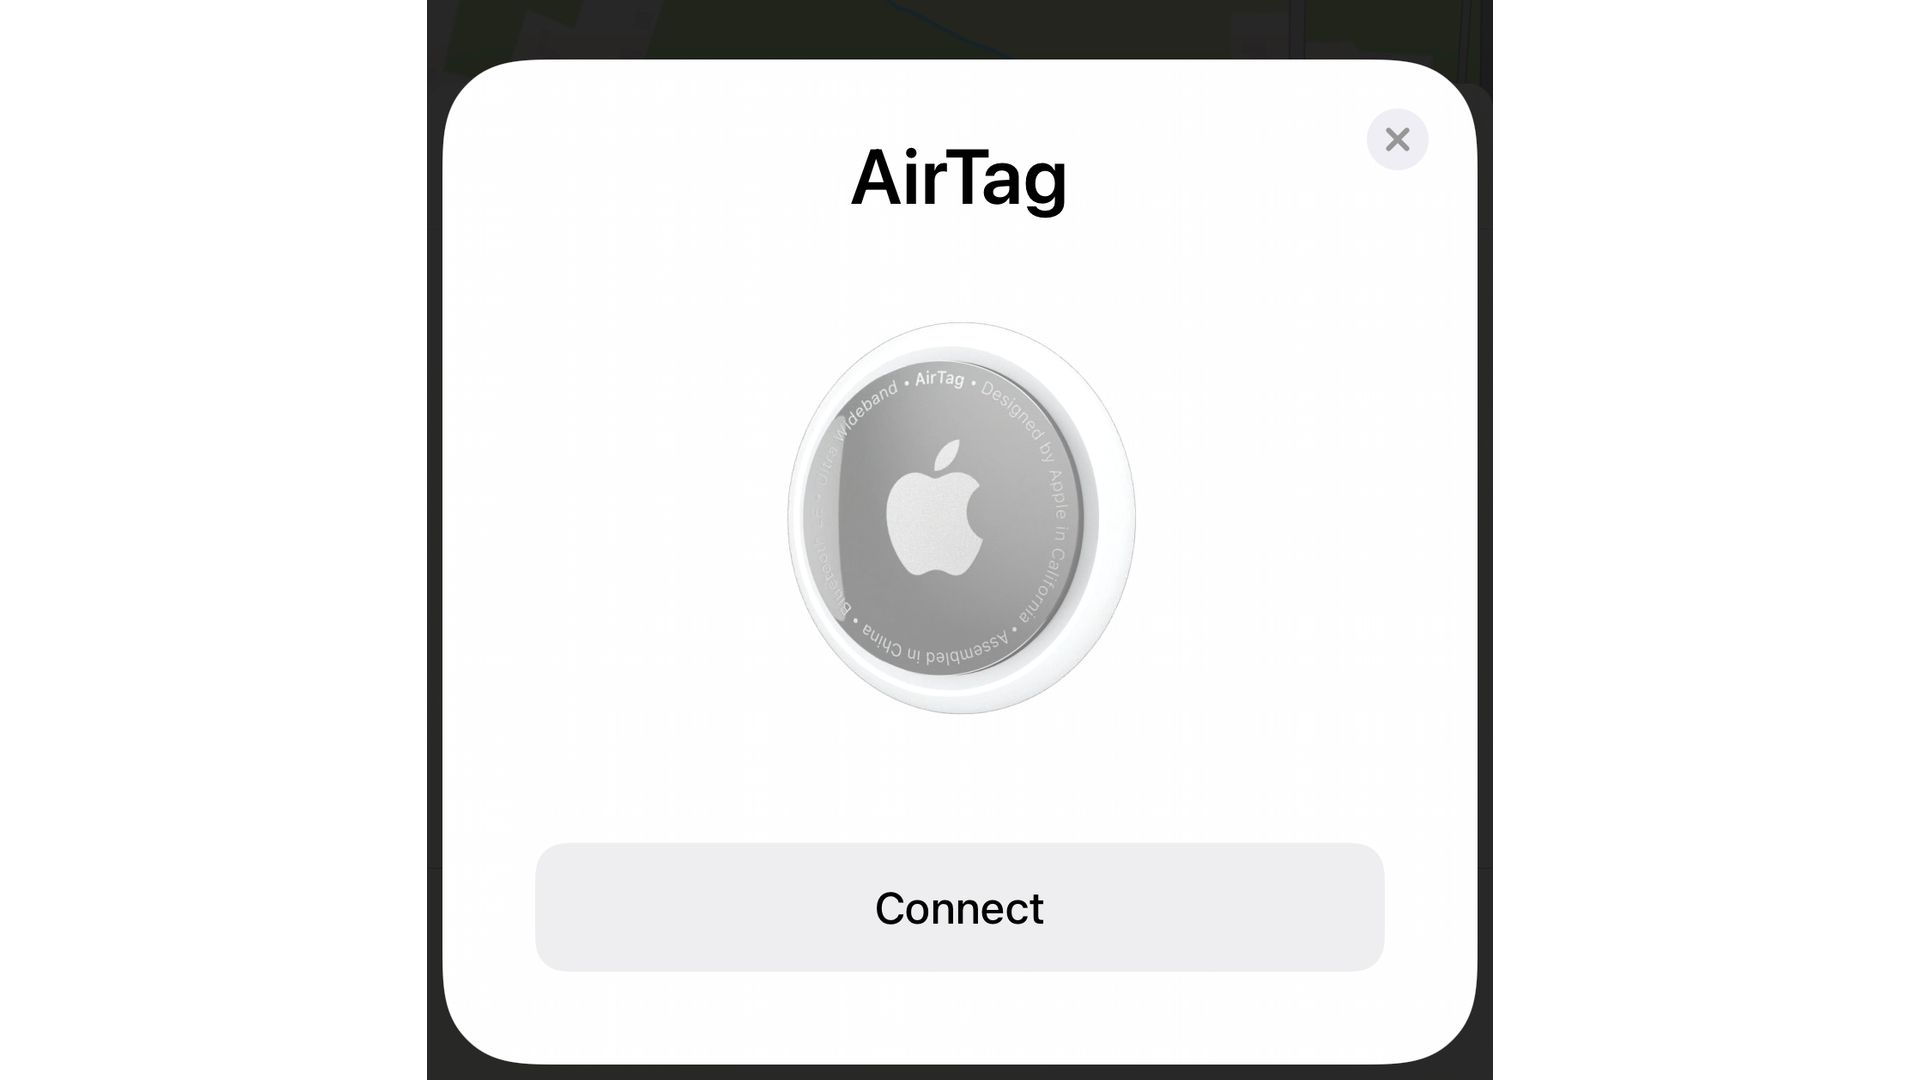 AirTag setup screen on an iPhone.